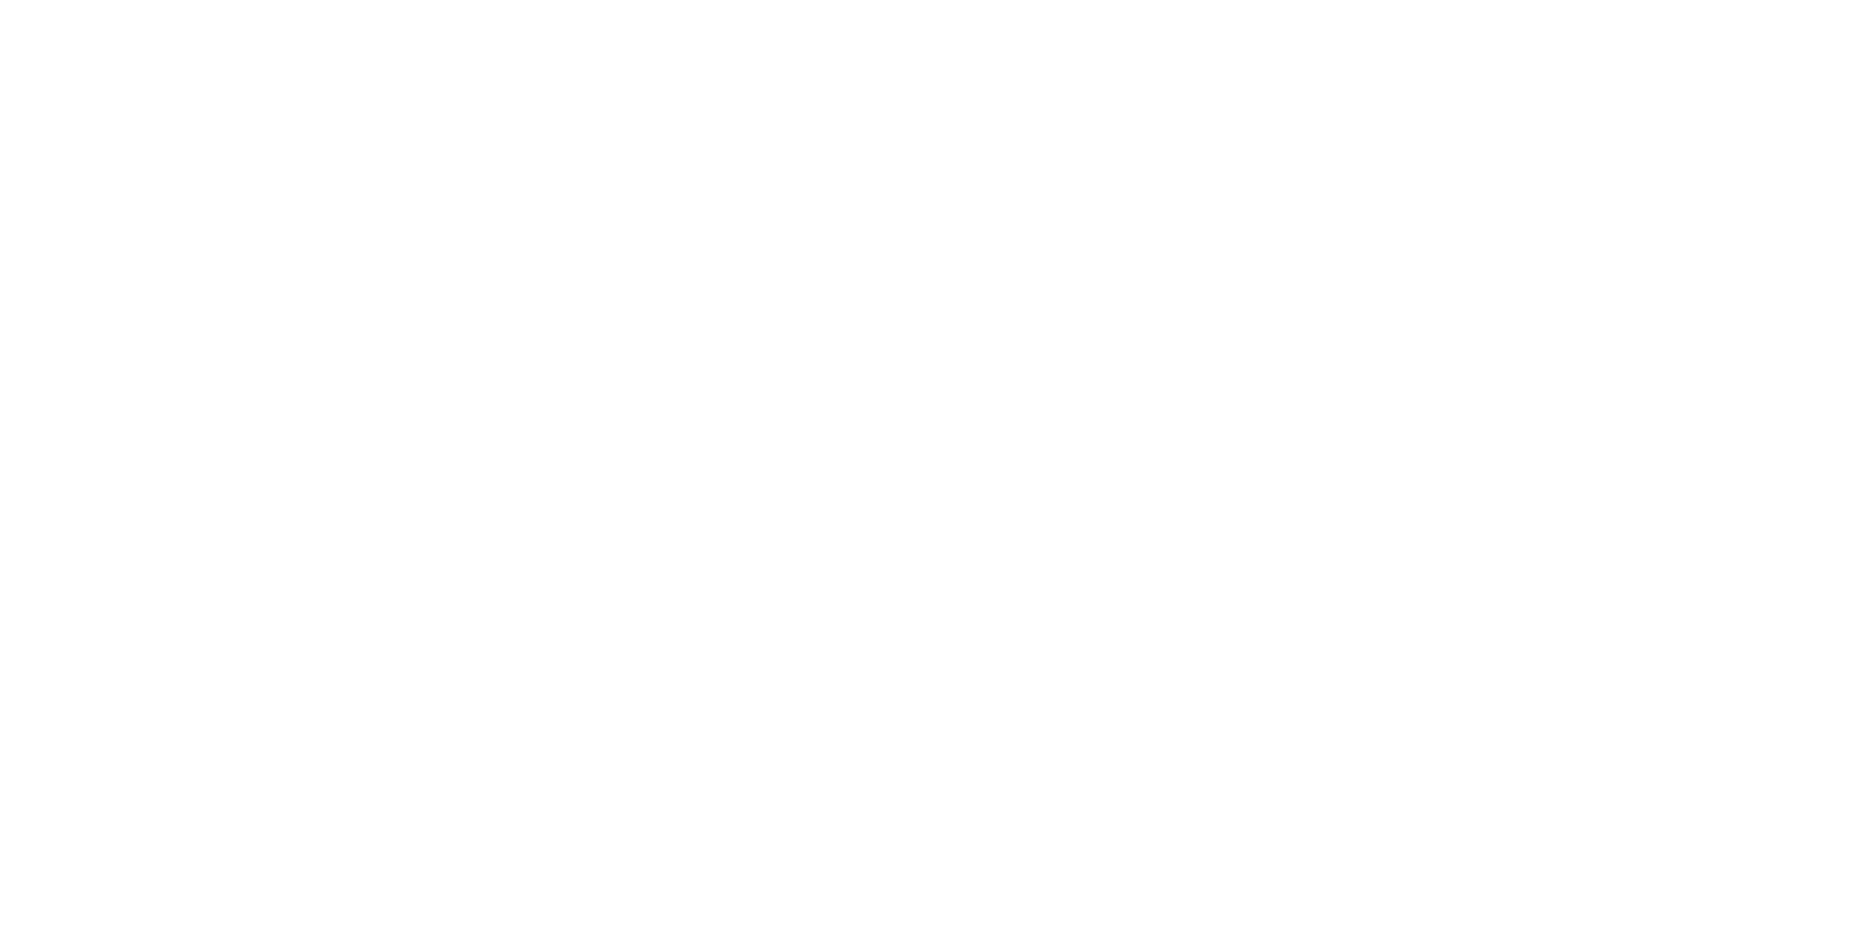 Christopher Wolf Crusade